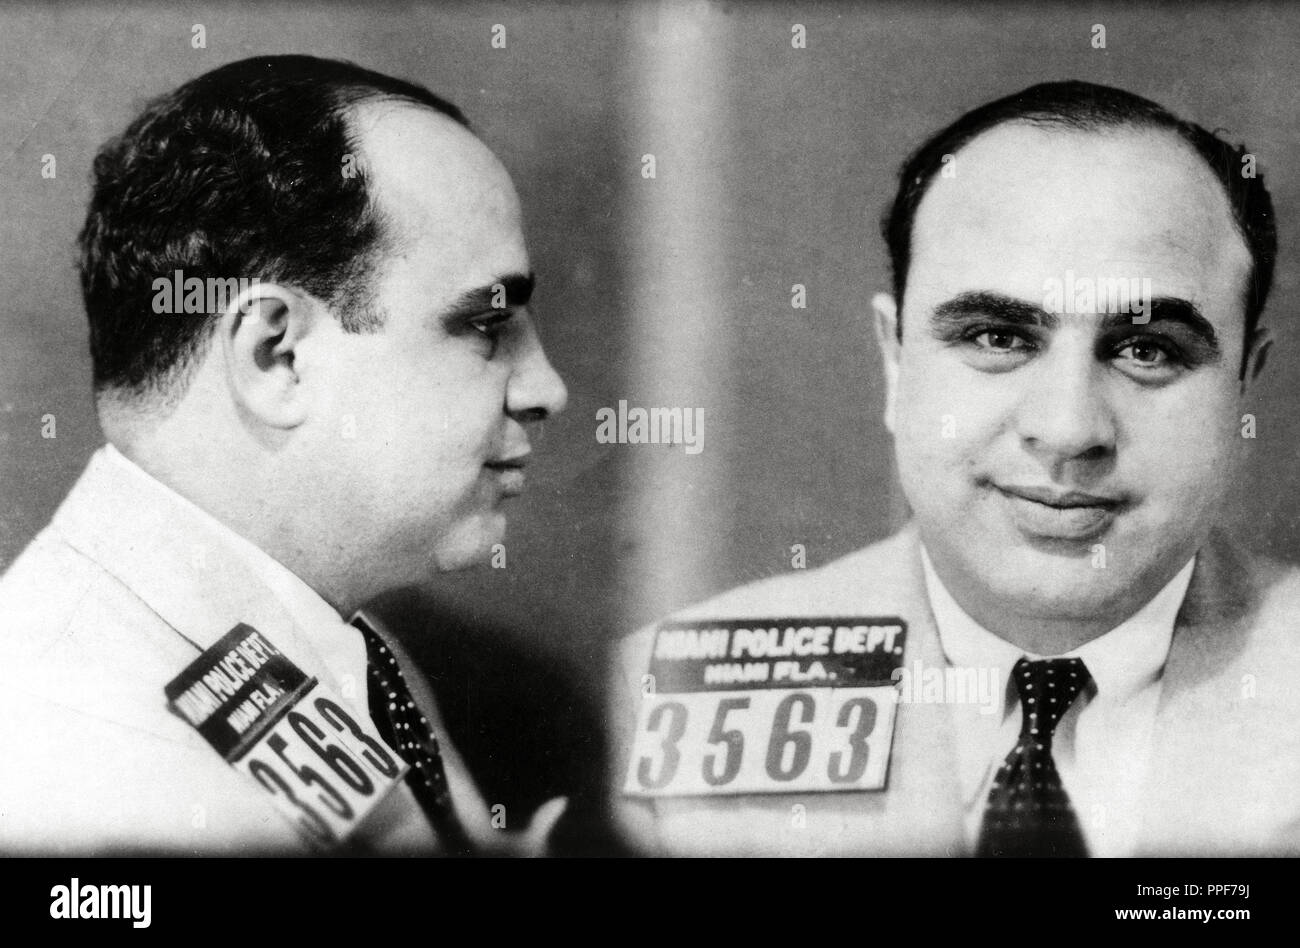 Police mug shot of gangster Al Capone. Stock Photo